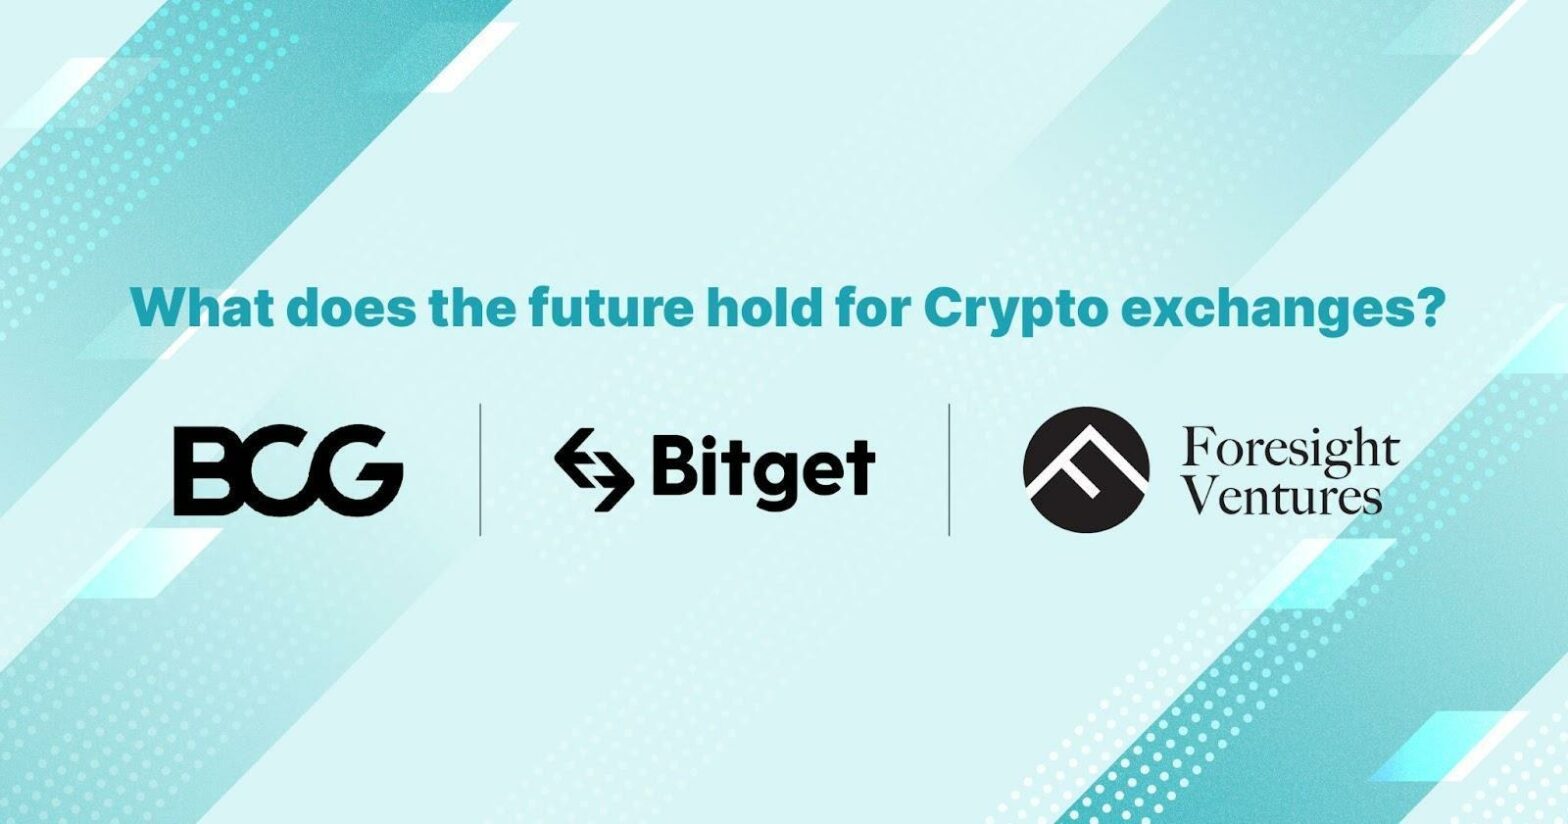 Bitget 和 BCG 預期加密貨幣交易所將會在 Web3 轉型中發揮關鍵作用，新興經濟體將蘊藏最大發展潛力